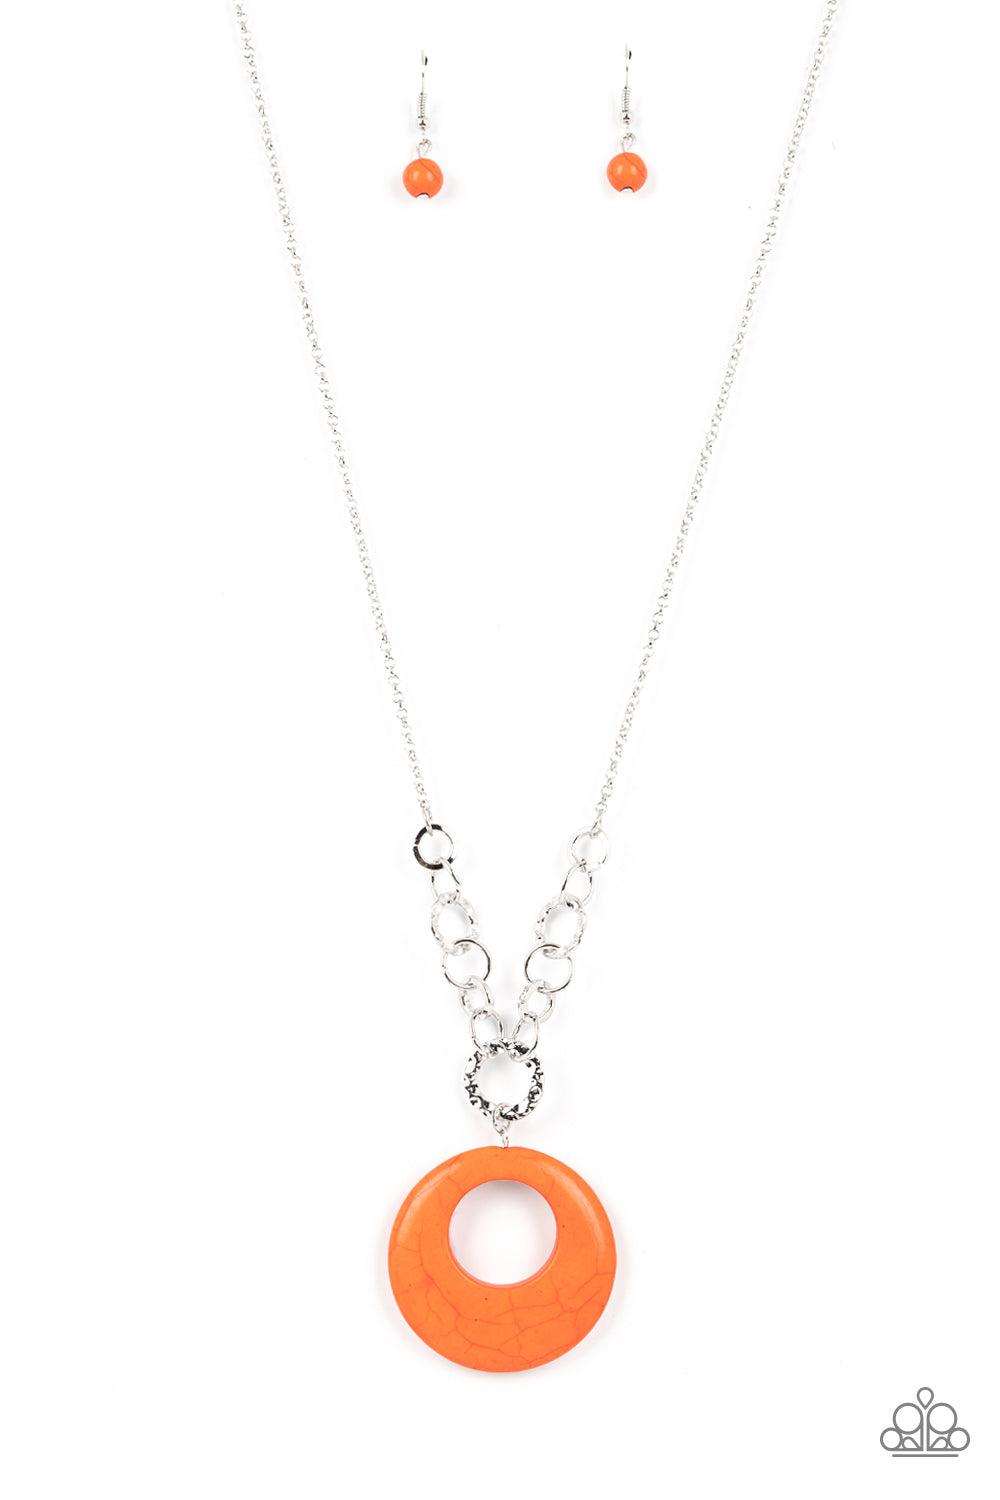 Hidden Dune Orange Stone Necklace - Paparazzi Accessories- lightbox - CarasShop.com - $5 Jewelry by Cara Jewels